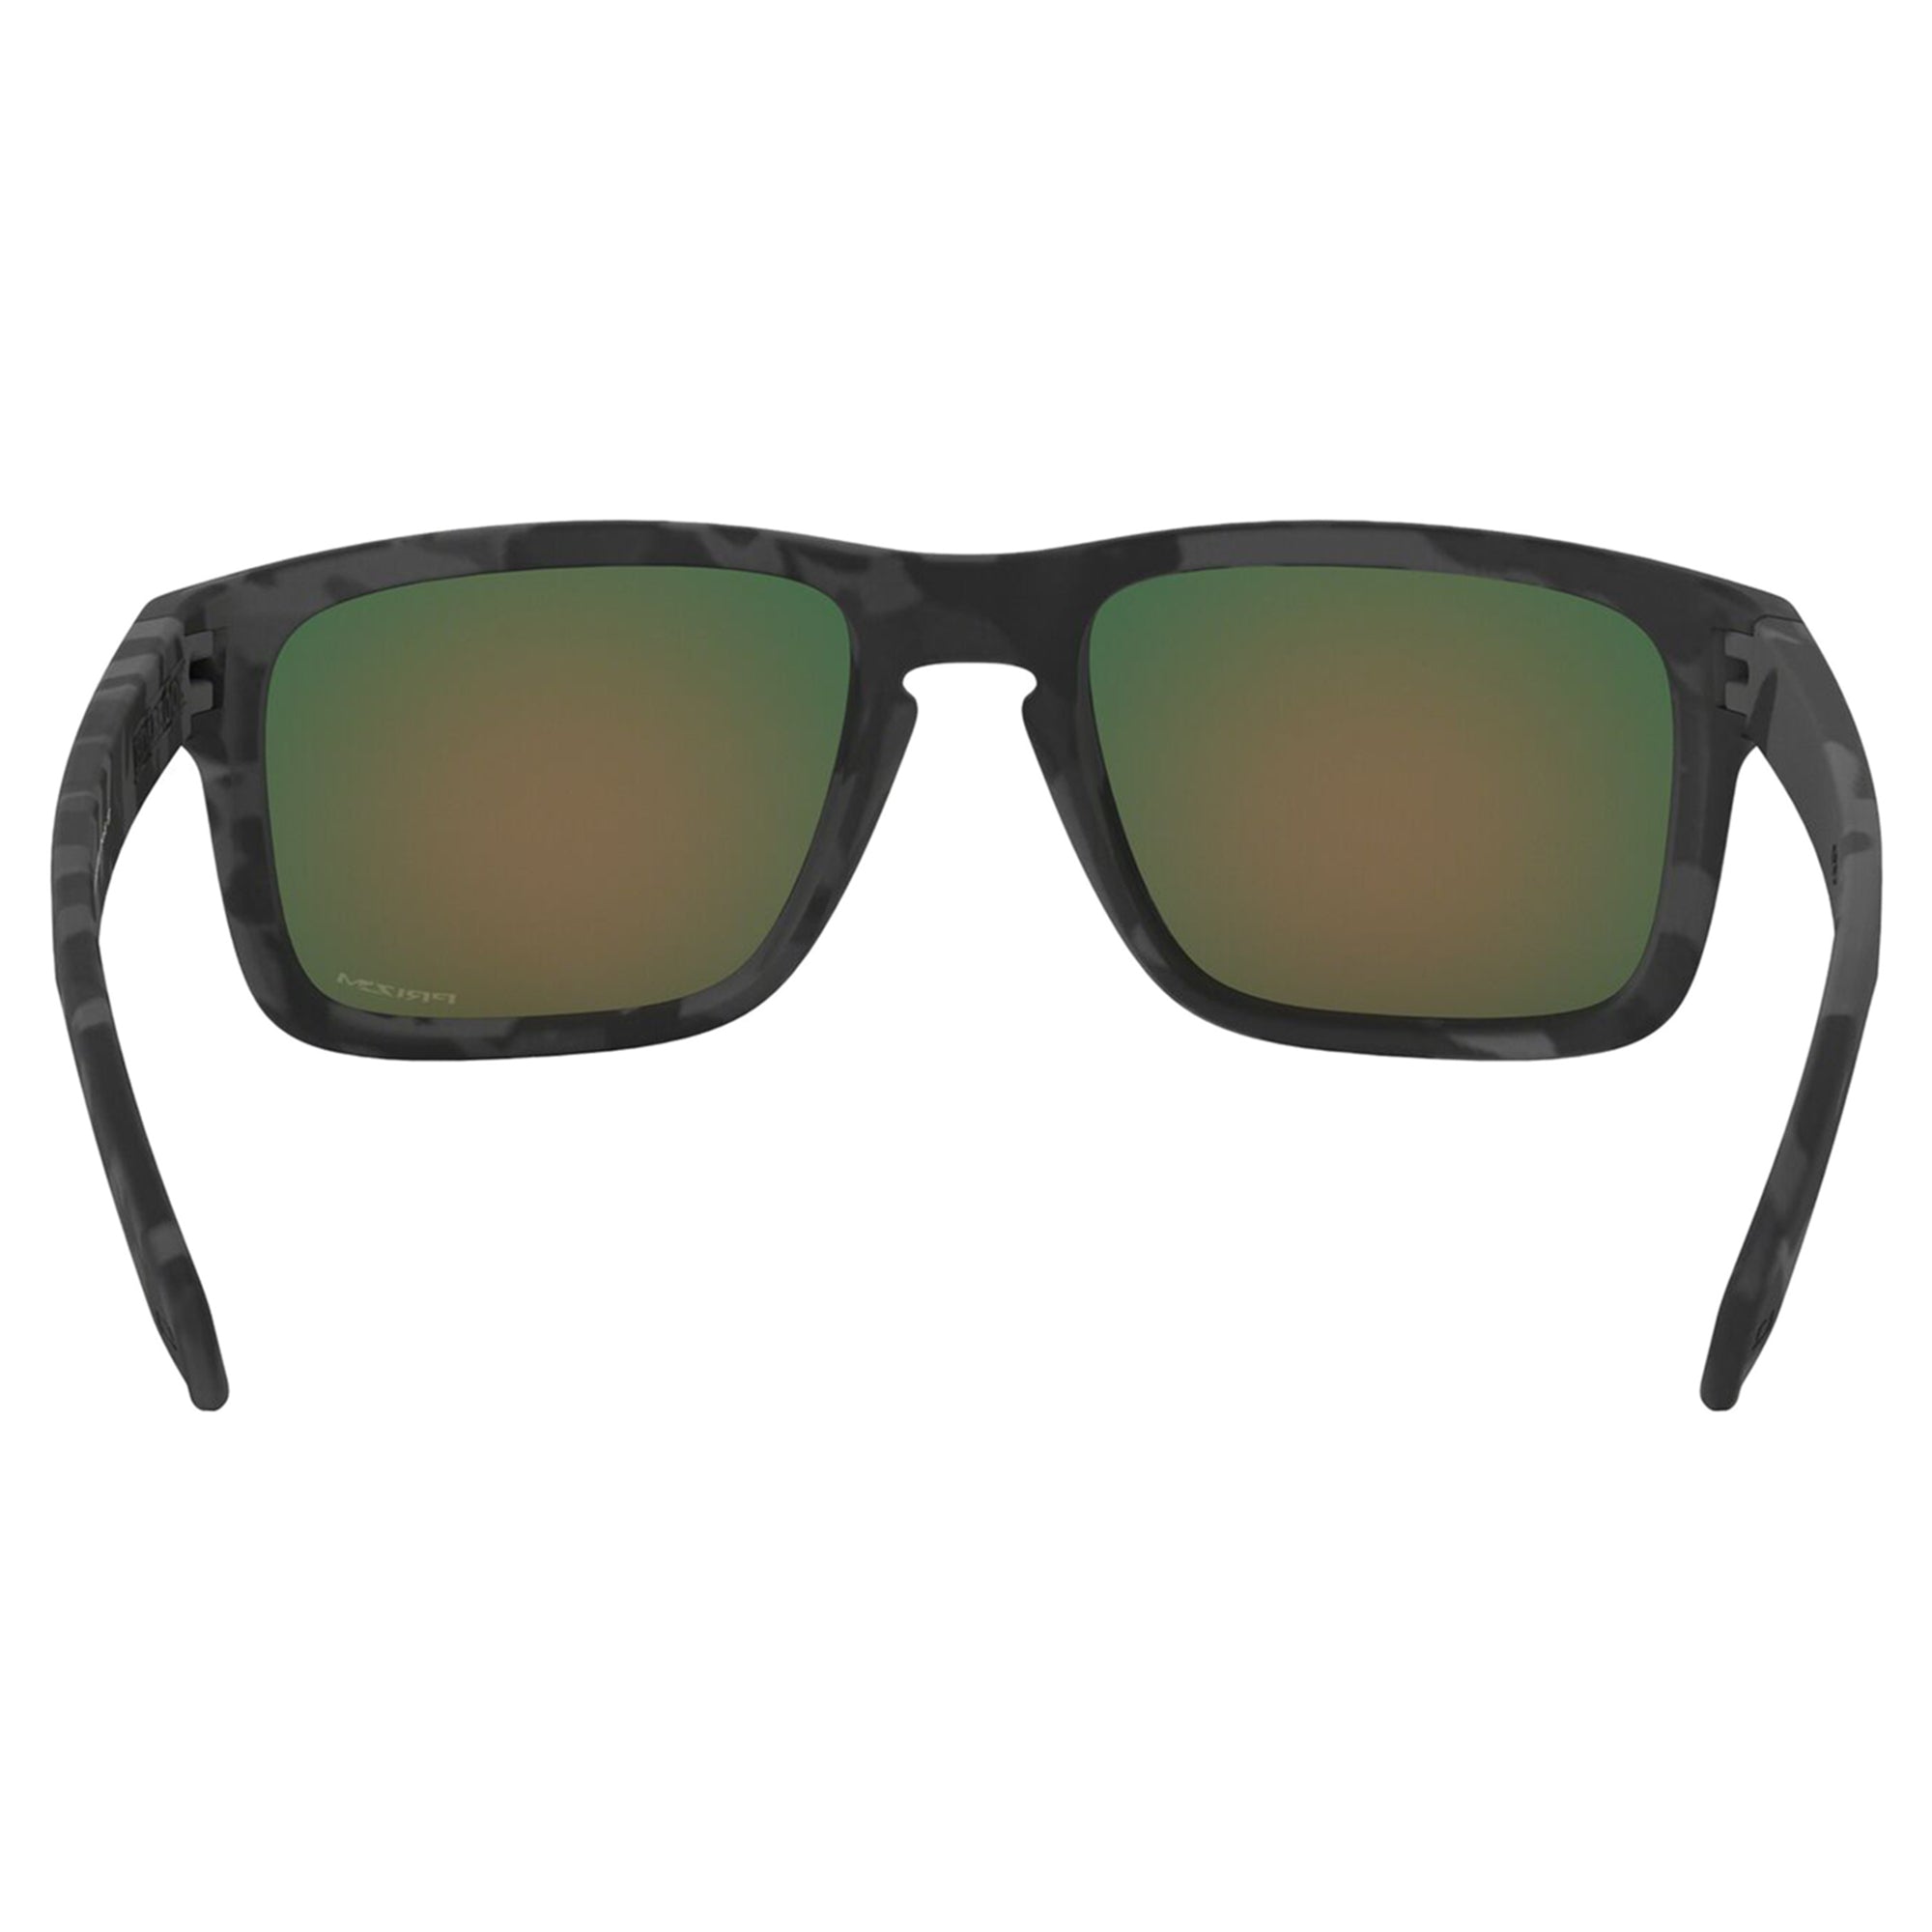 Oakley Holbrook Collection Sunglasses - Black Camo/Prizm Ruby - OO9102-E9